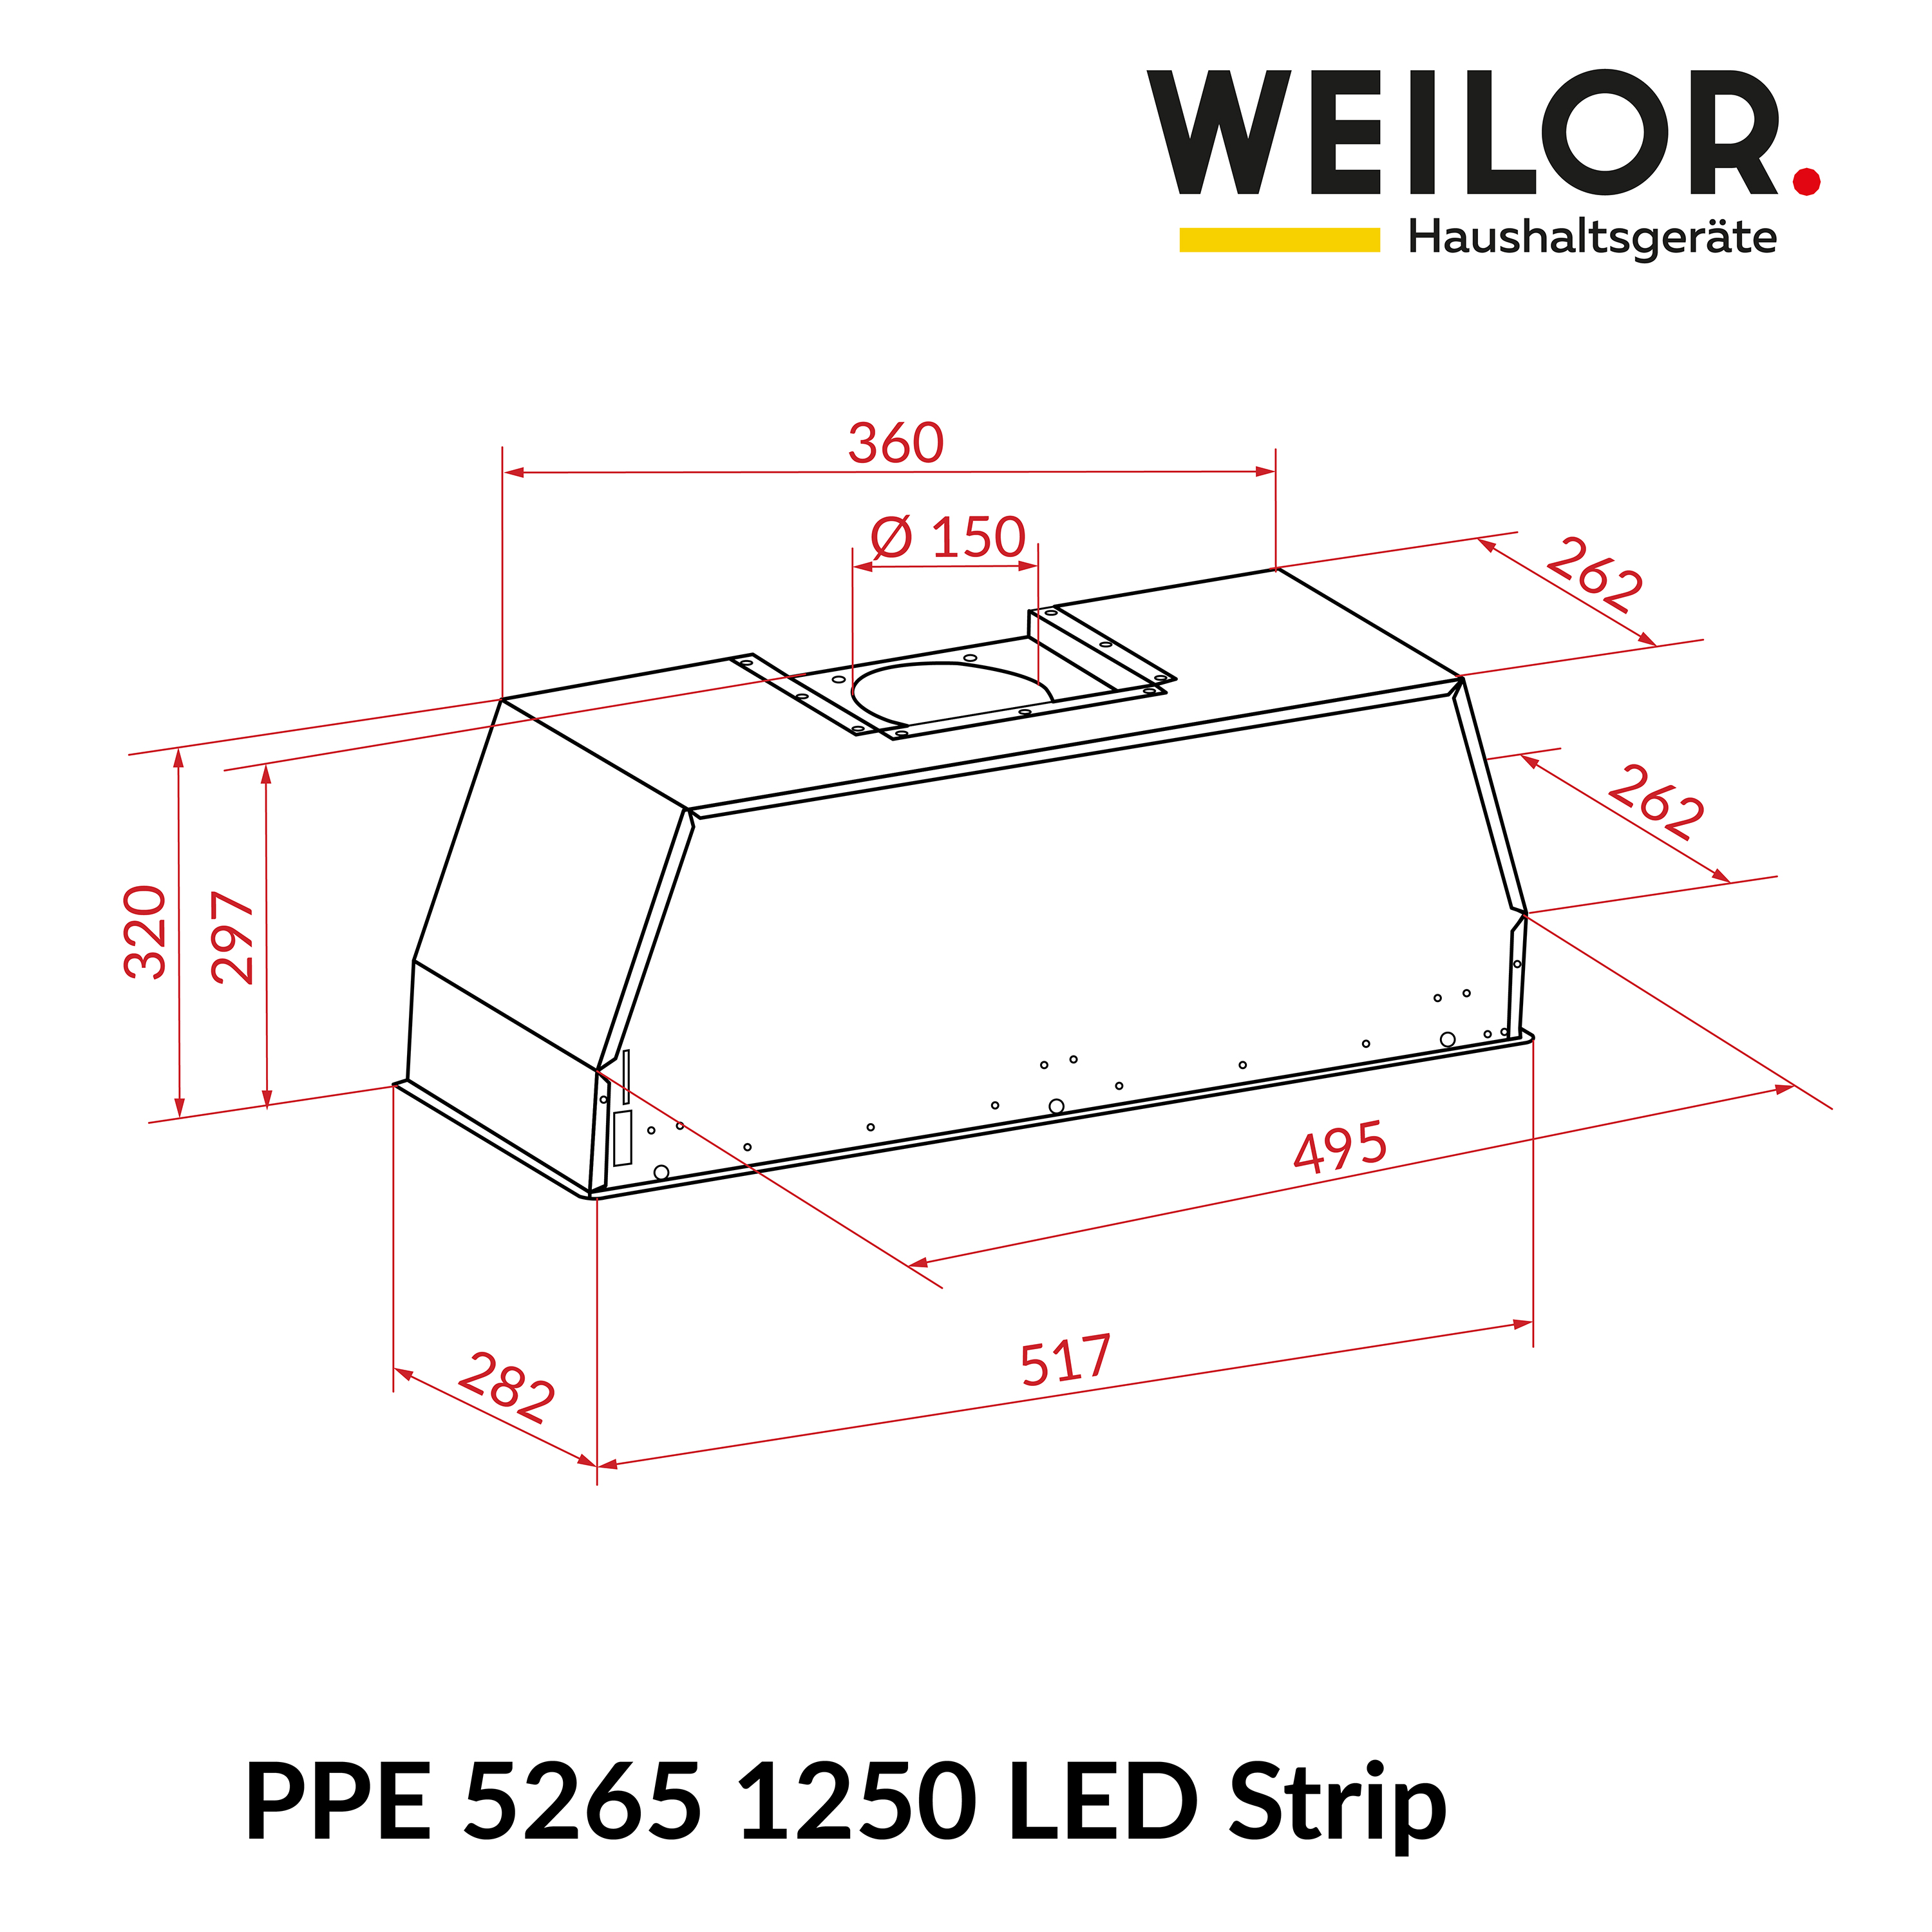 Weilor PPE 5265 SS 1250 LED Strip Габаритные размеры